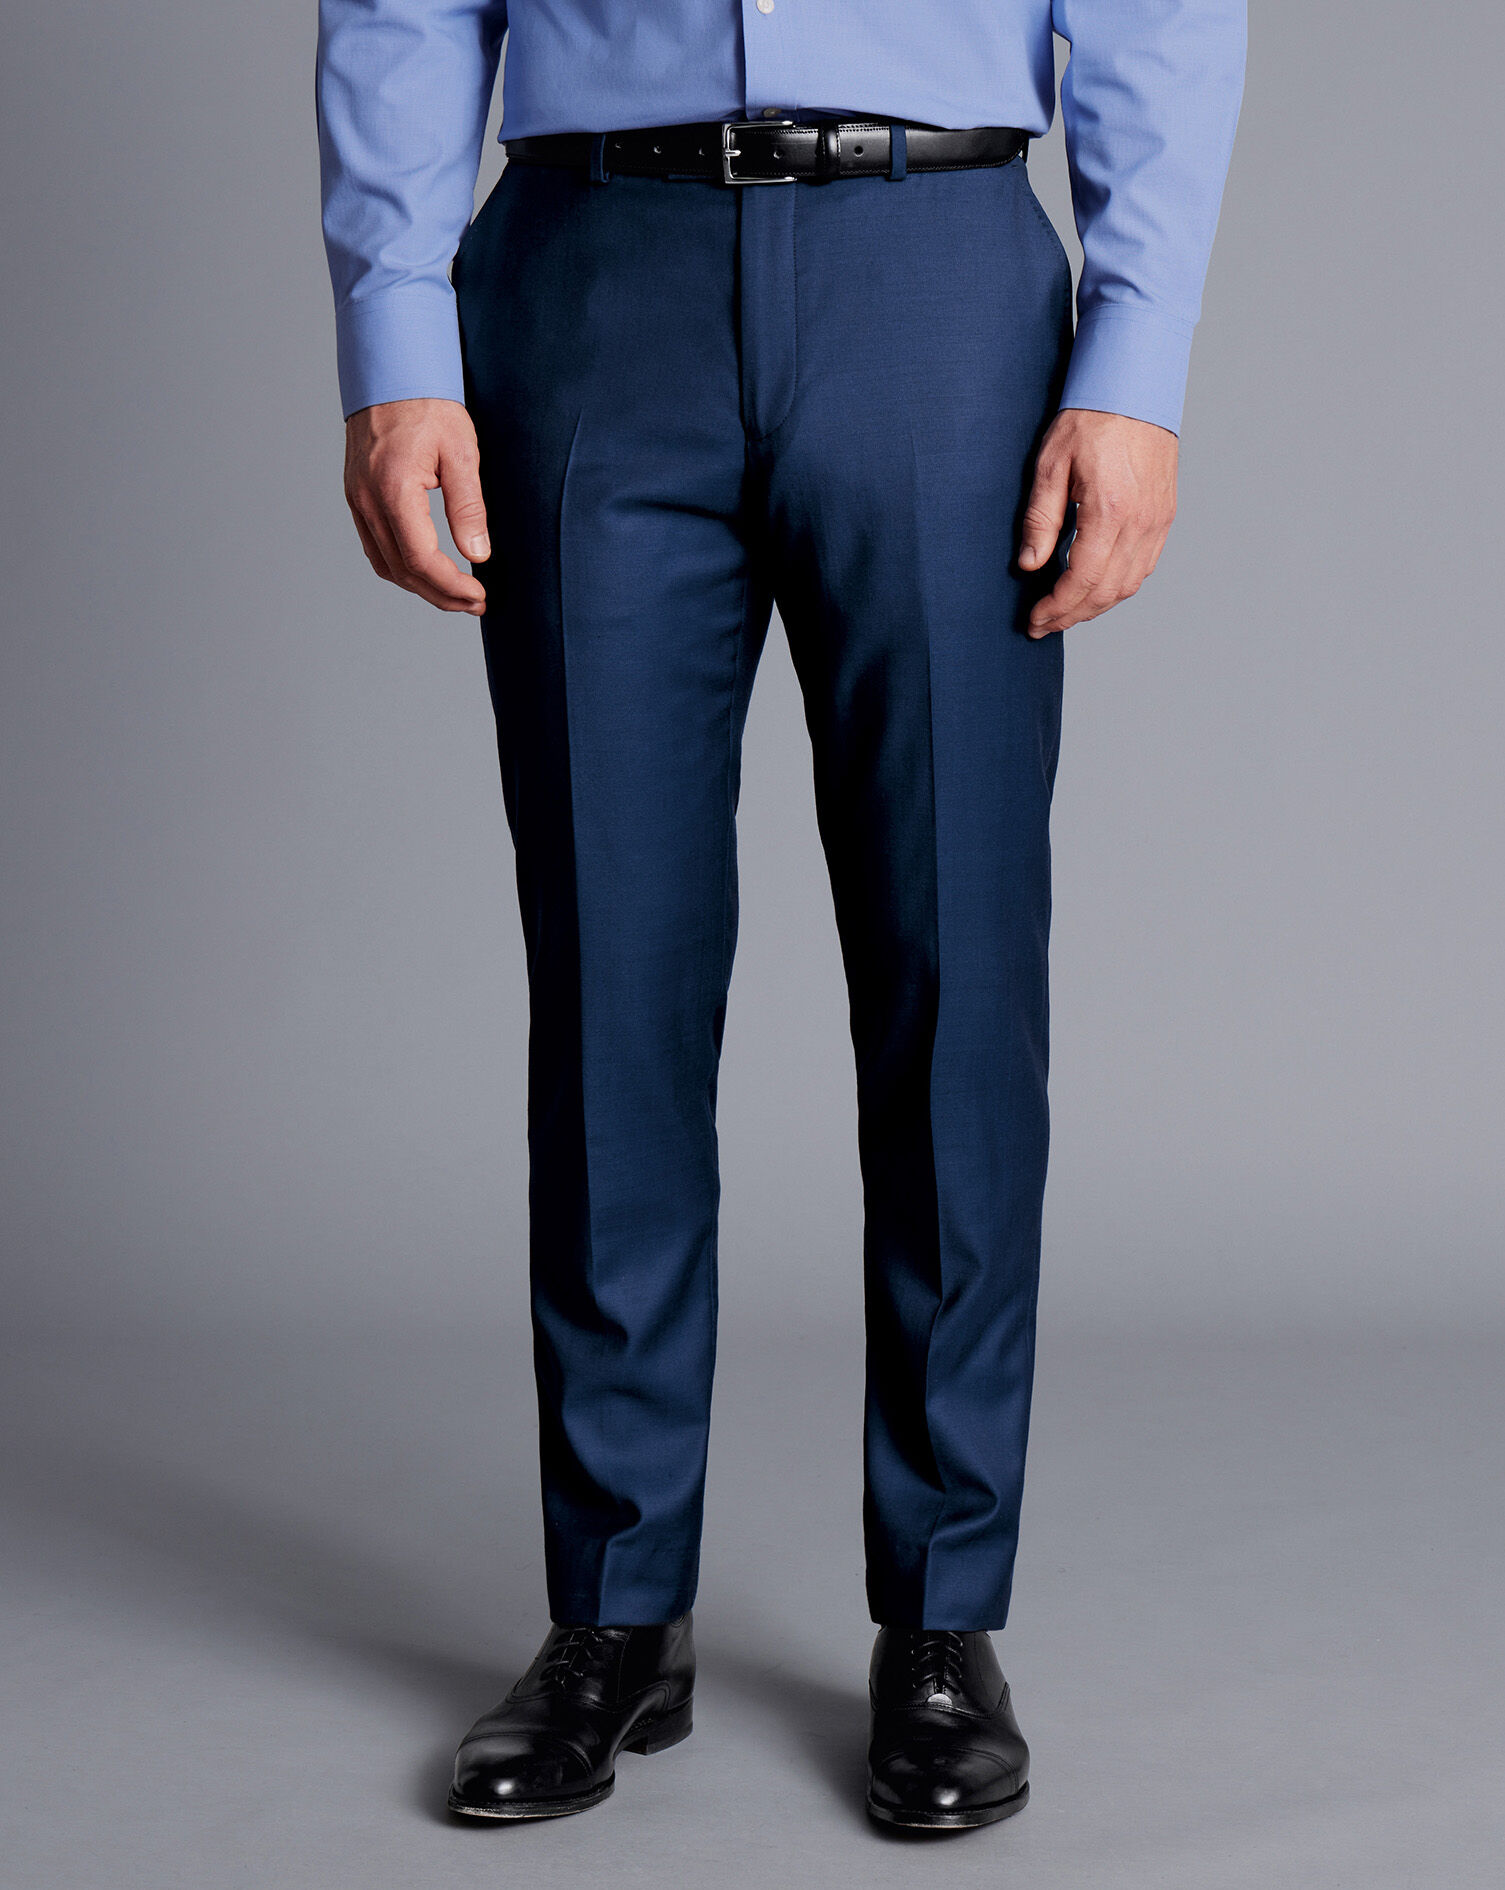 Skylinewears Mens Denim Workwear pants Cordura Knee Reinforcement Trousers  Mid Blue 40-30 - Walmart.com